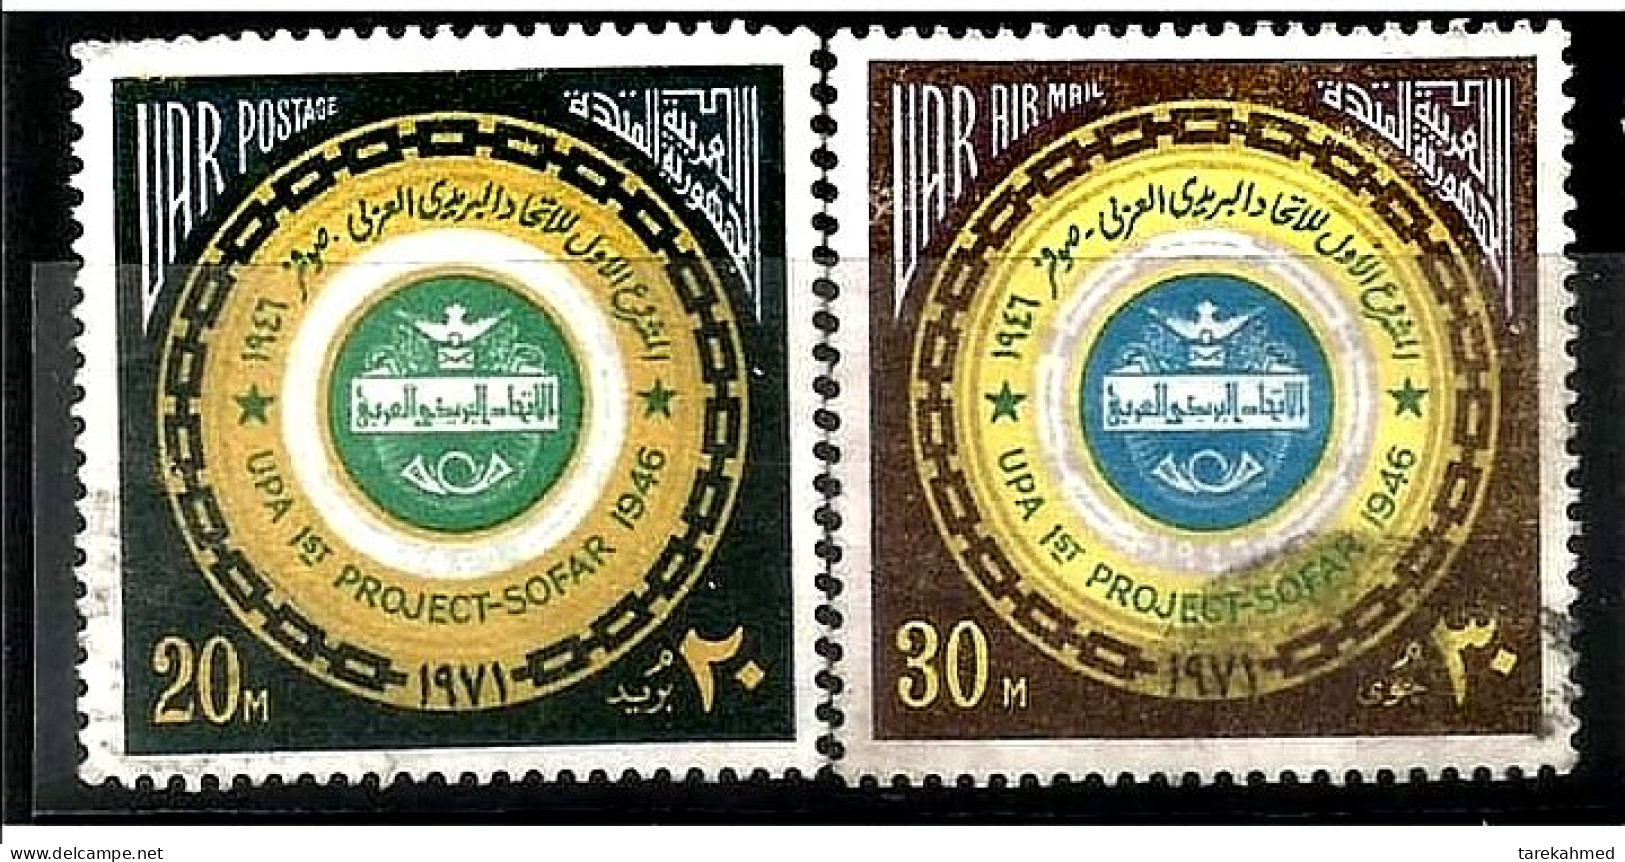 EGYPT 1971, Complete SET Of The CONFERENCE OF SOFAR, LEBANON ESTABILISHING THE APU, VF' - Oblitérés